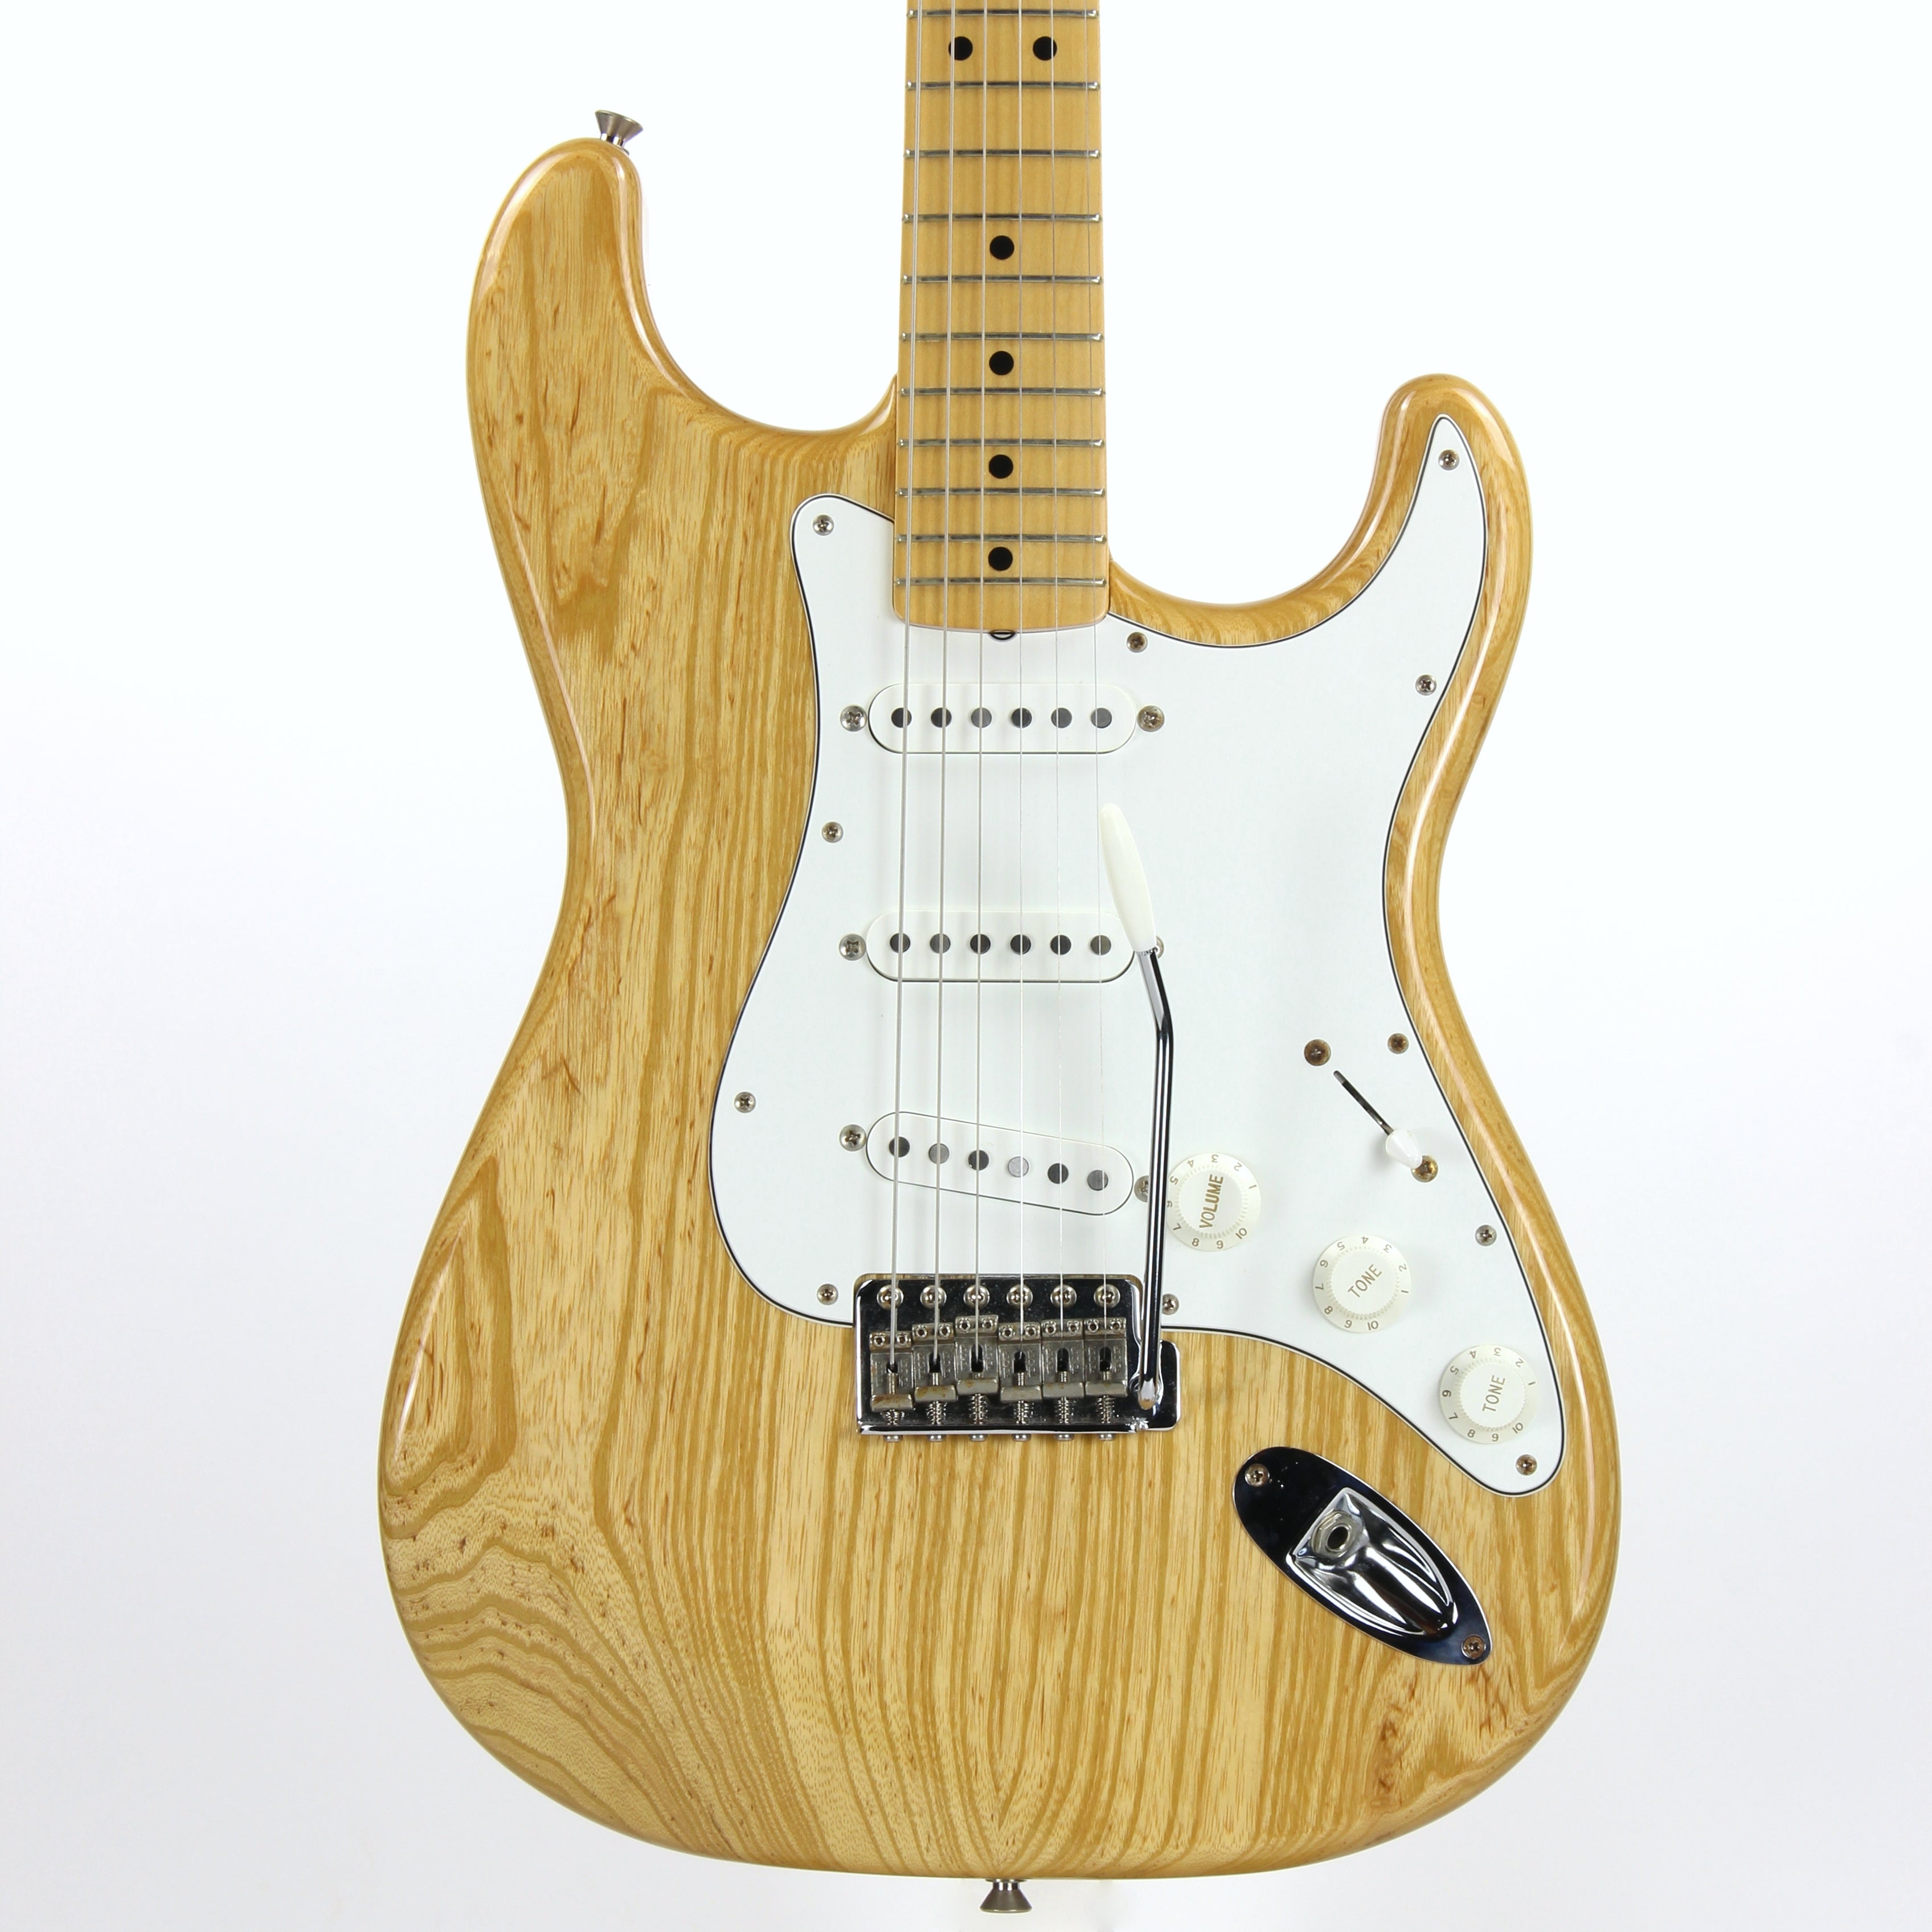 *SOLD* 1997 Fender Japan '67 Stratocaster CIJ -- Natural Ash Body ST67  Maple Cap Neck, Big Headstock!